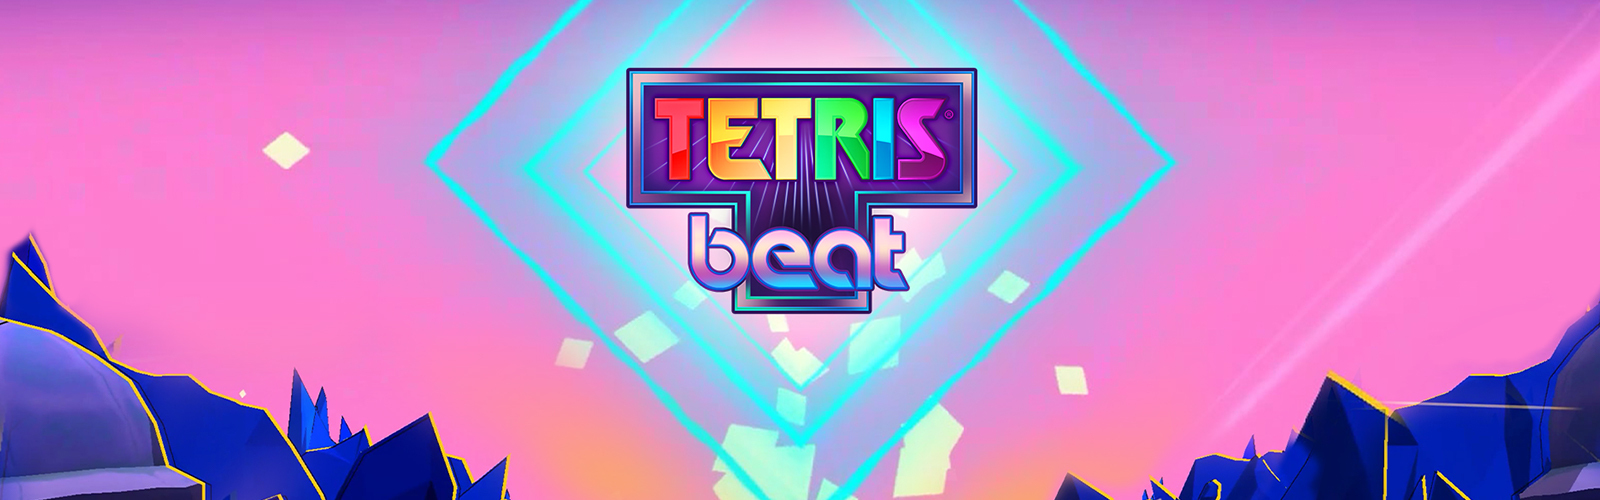 tetris-tf-uproxx.jpg